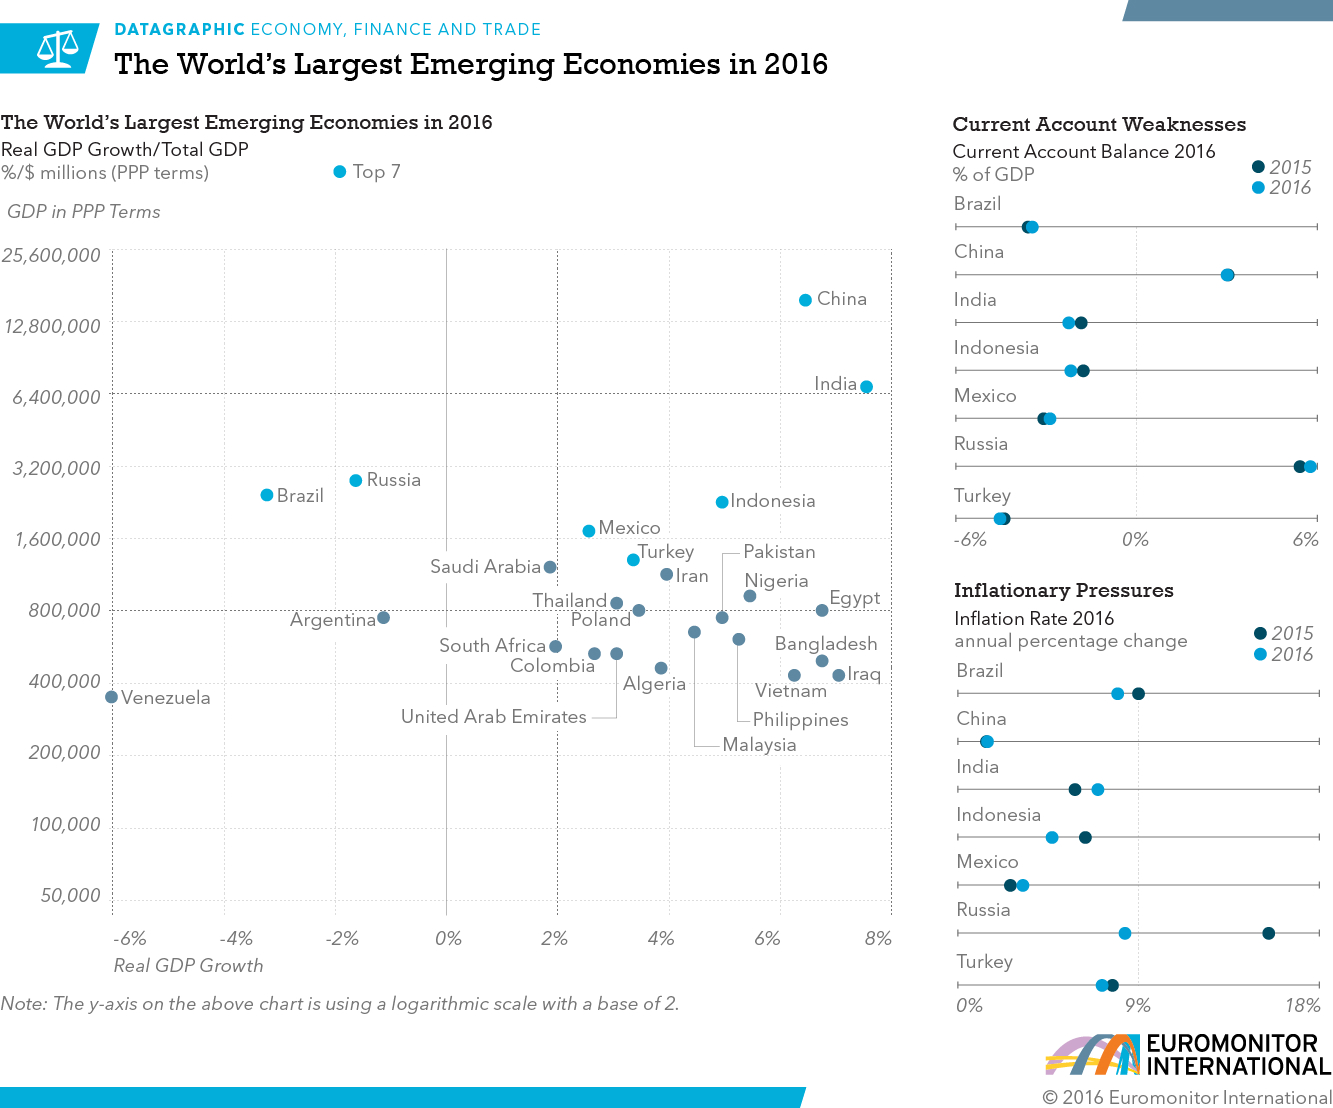 emi_worldsLargestEconomies2016-v1.0_med